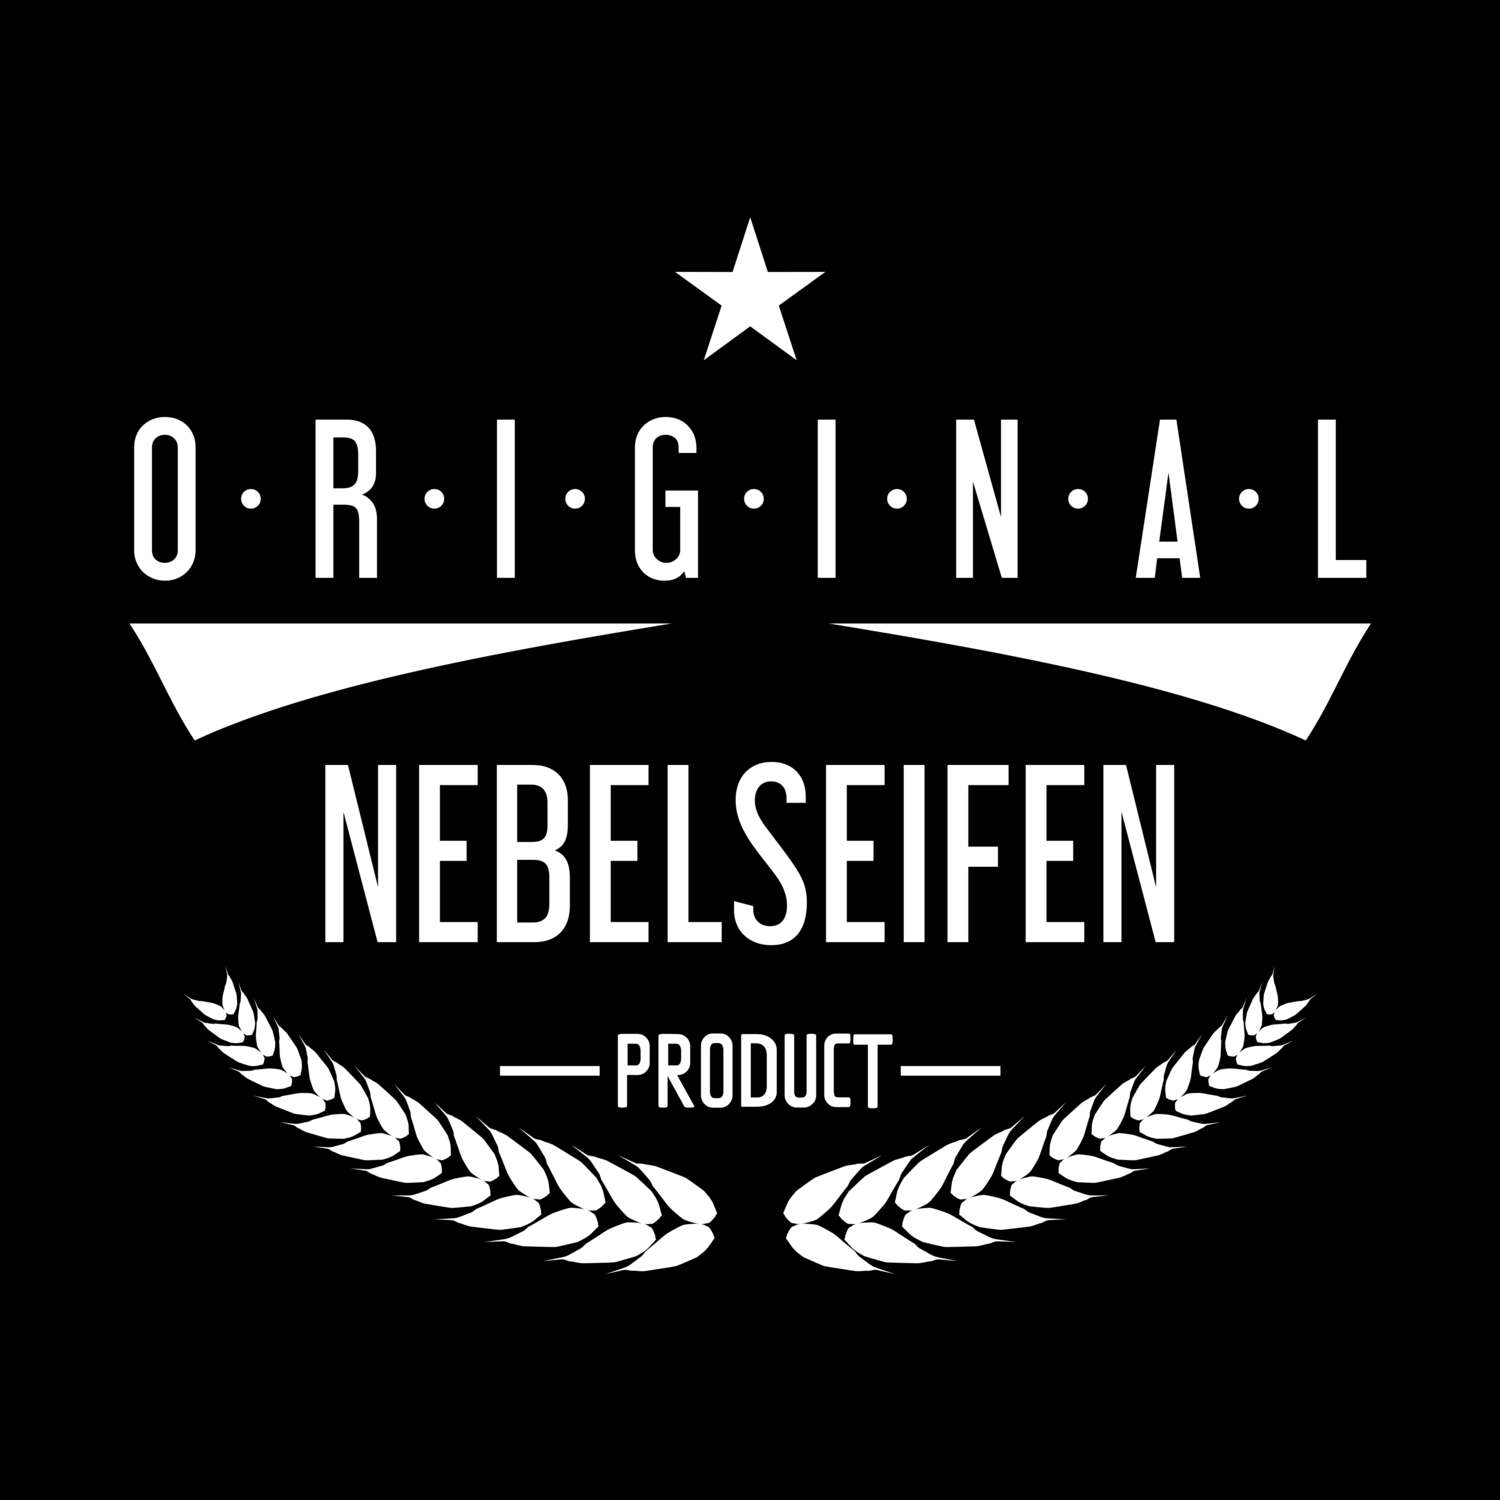 Nebelseifen T-Shirt »Original Product«